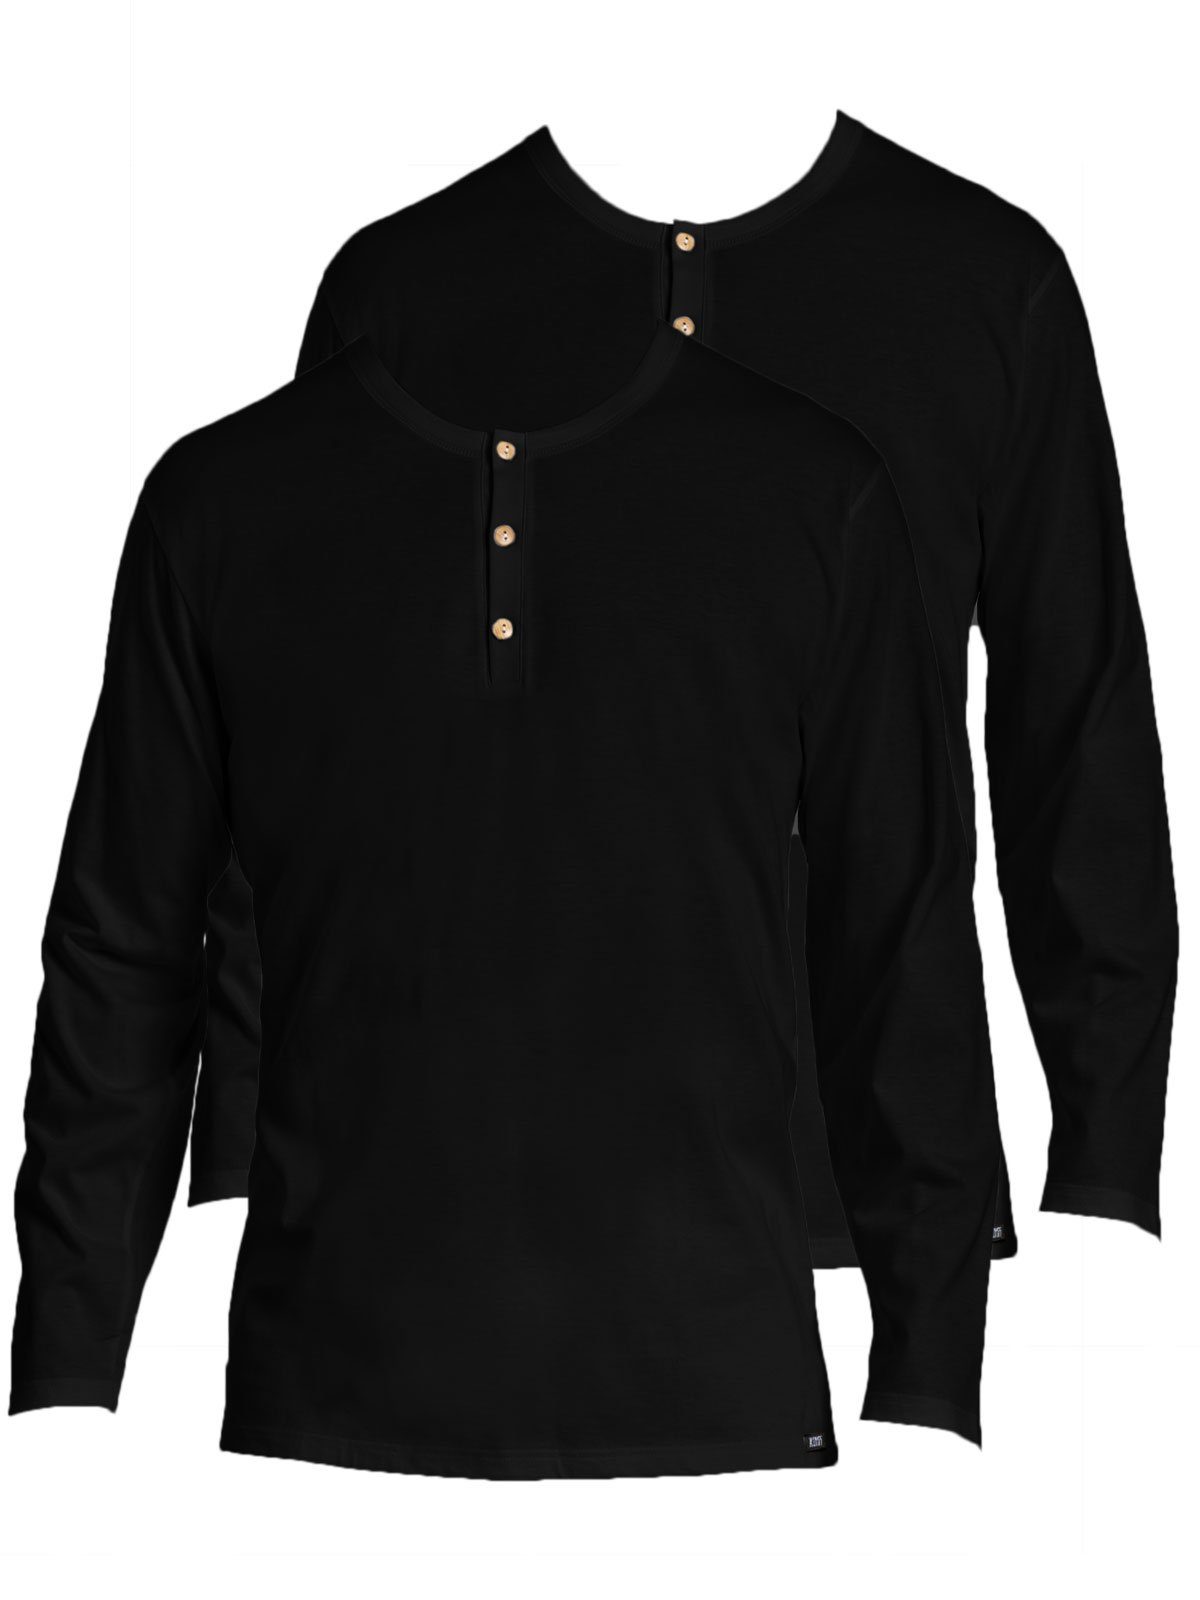 KUMPF Unterziehshirt 2er Sparpack Herren langarm Shirt Bio Cotton (Spar-Set, 2-St) hohe Markenqualität schwarz